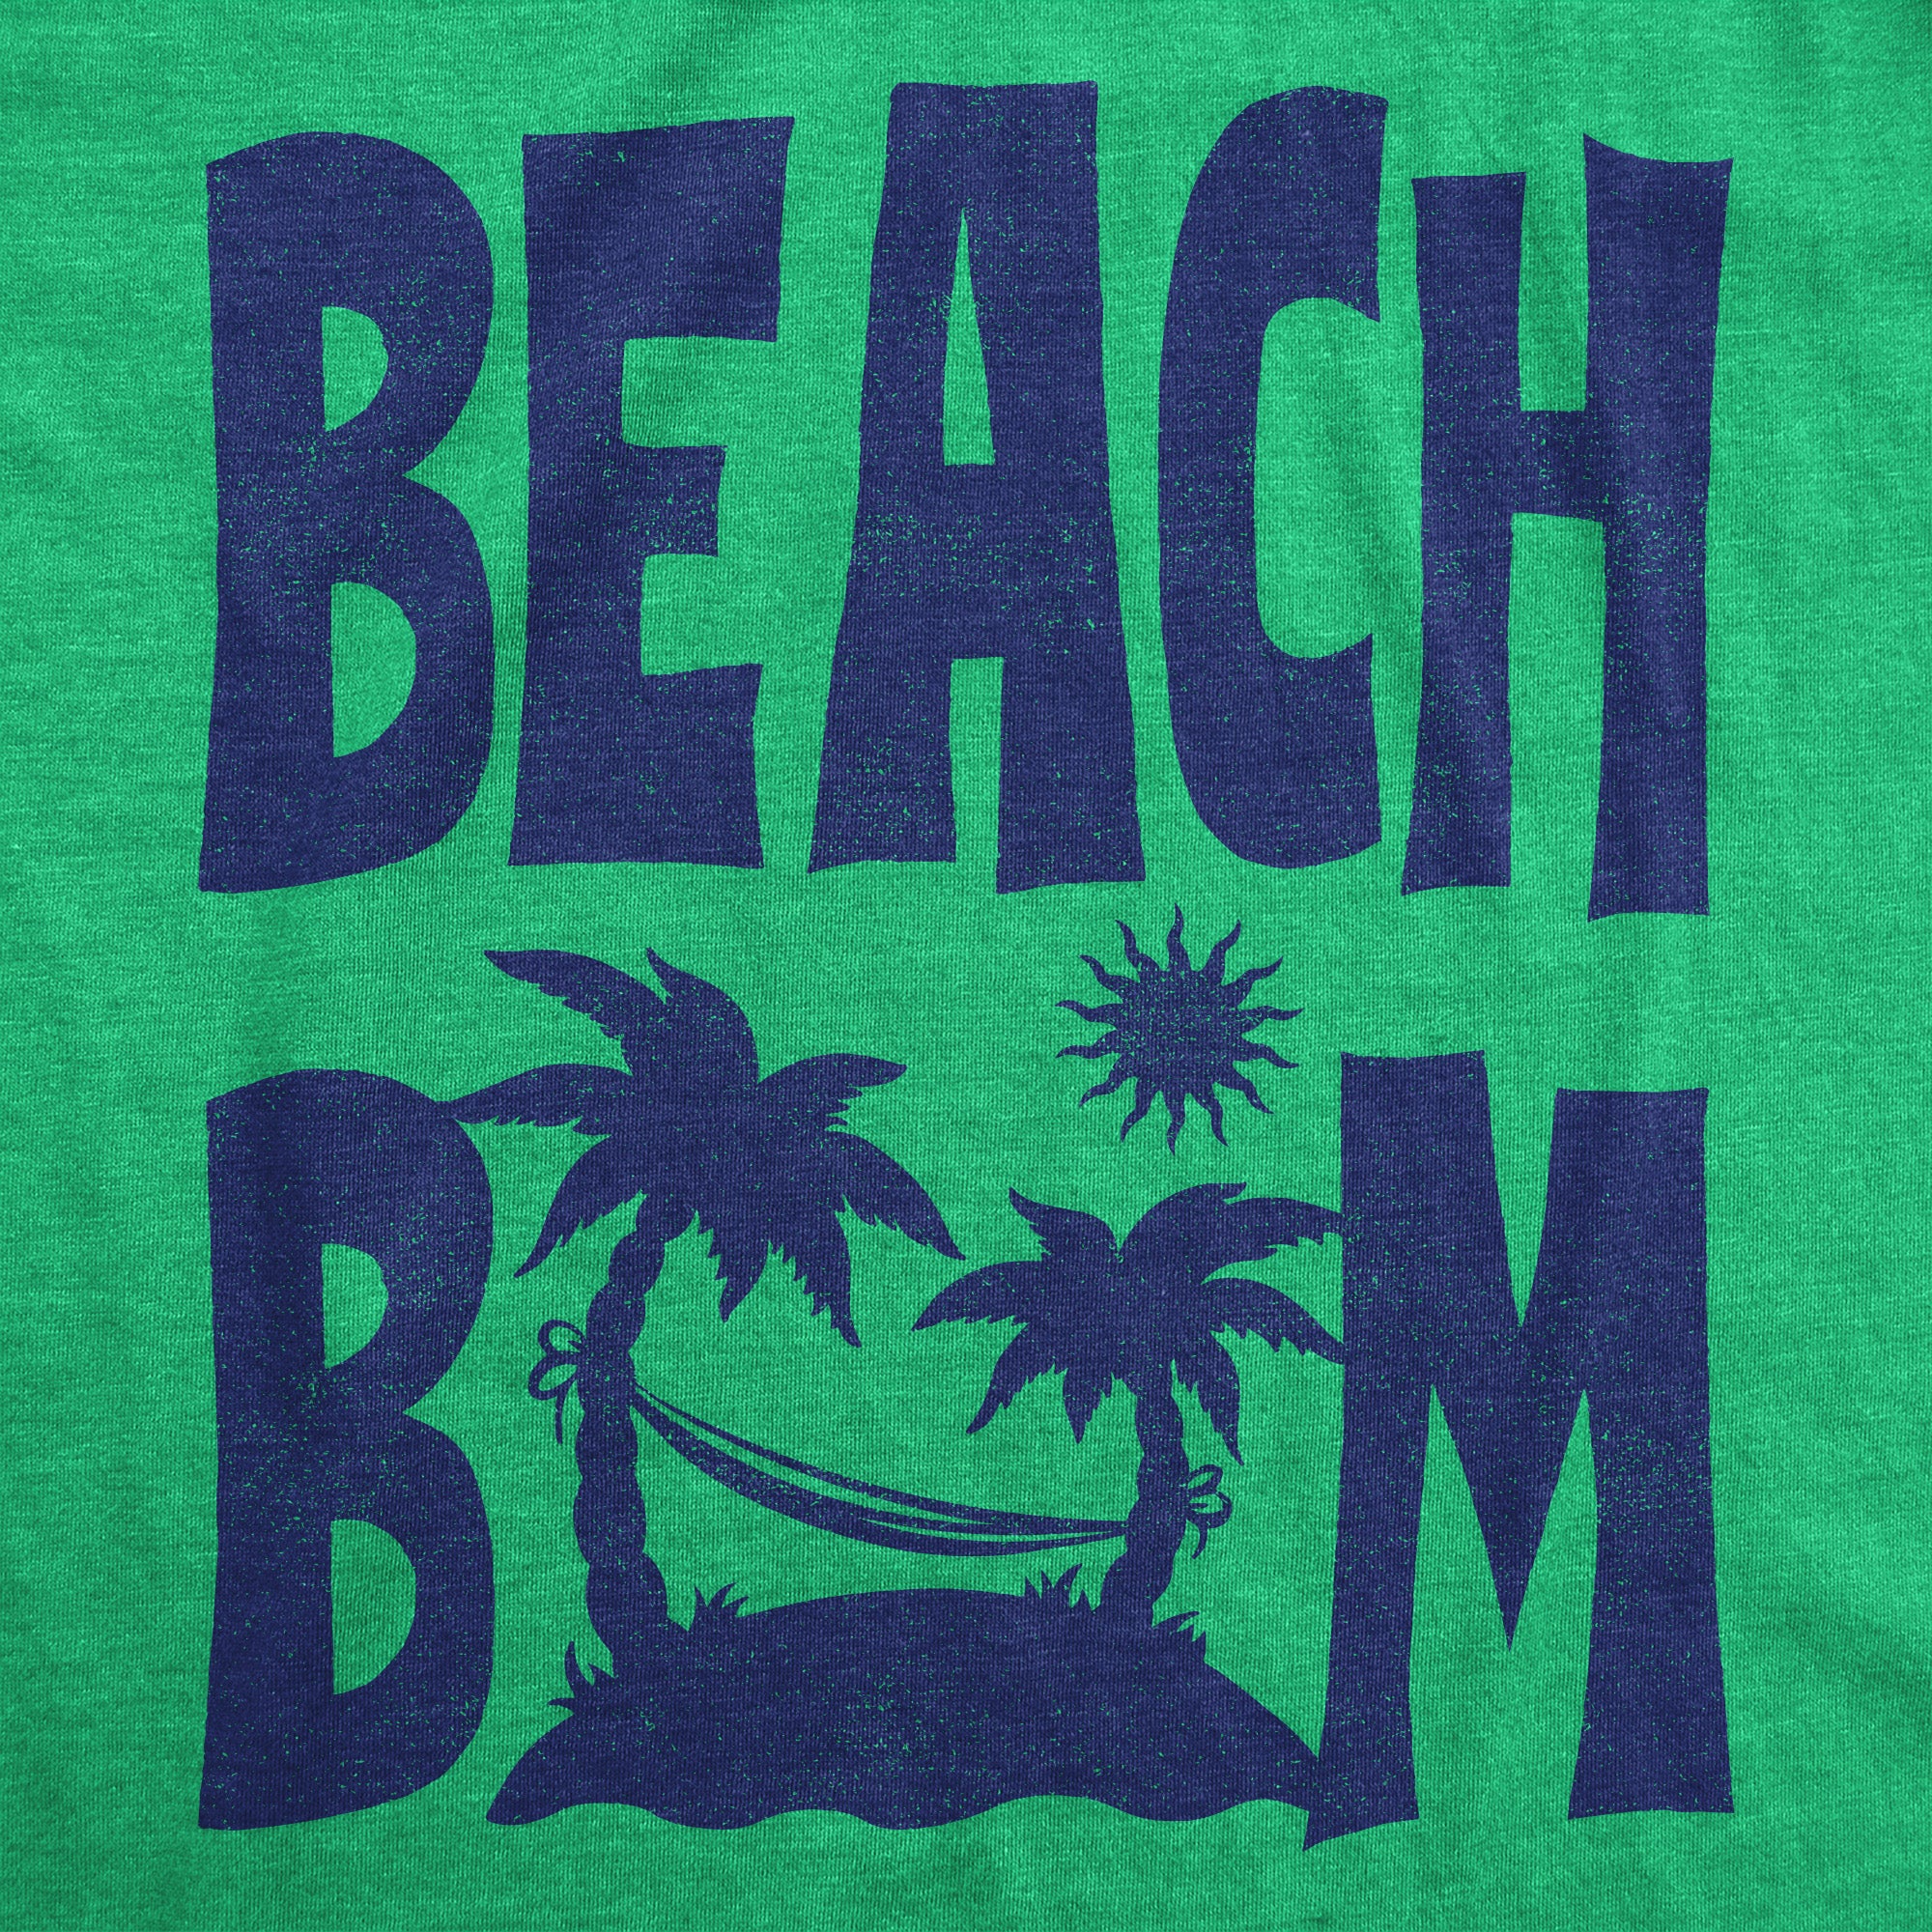 Funny Heather Green - BEACHBUM Beach Bum Womens T Shirt Nerdy Vacation sarcastic Tee